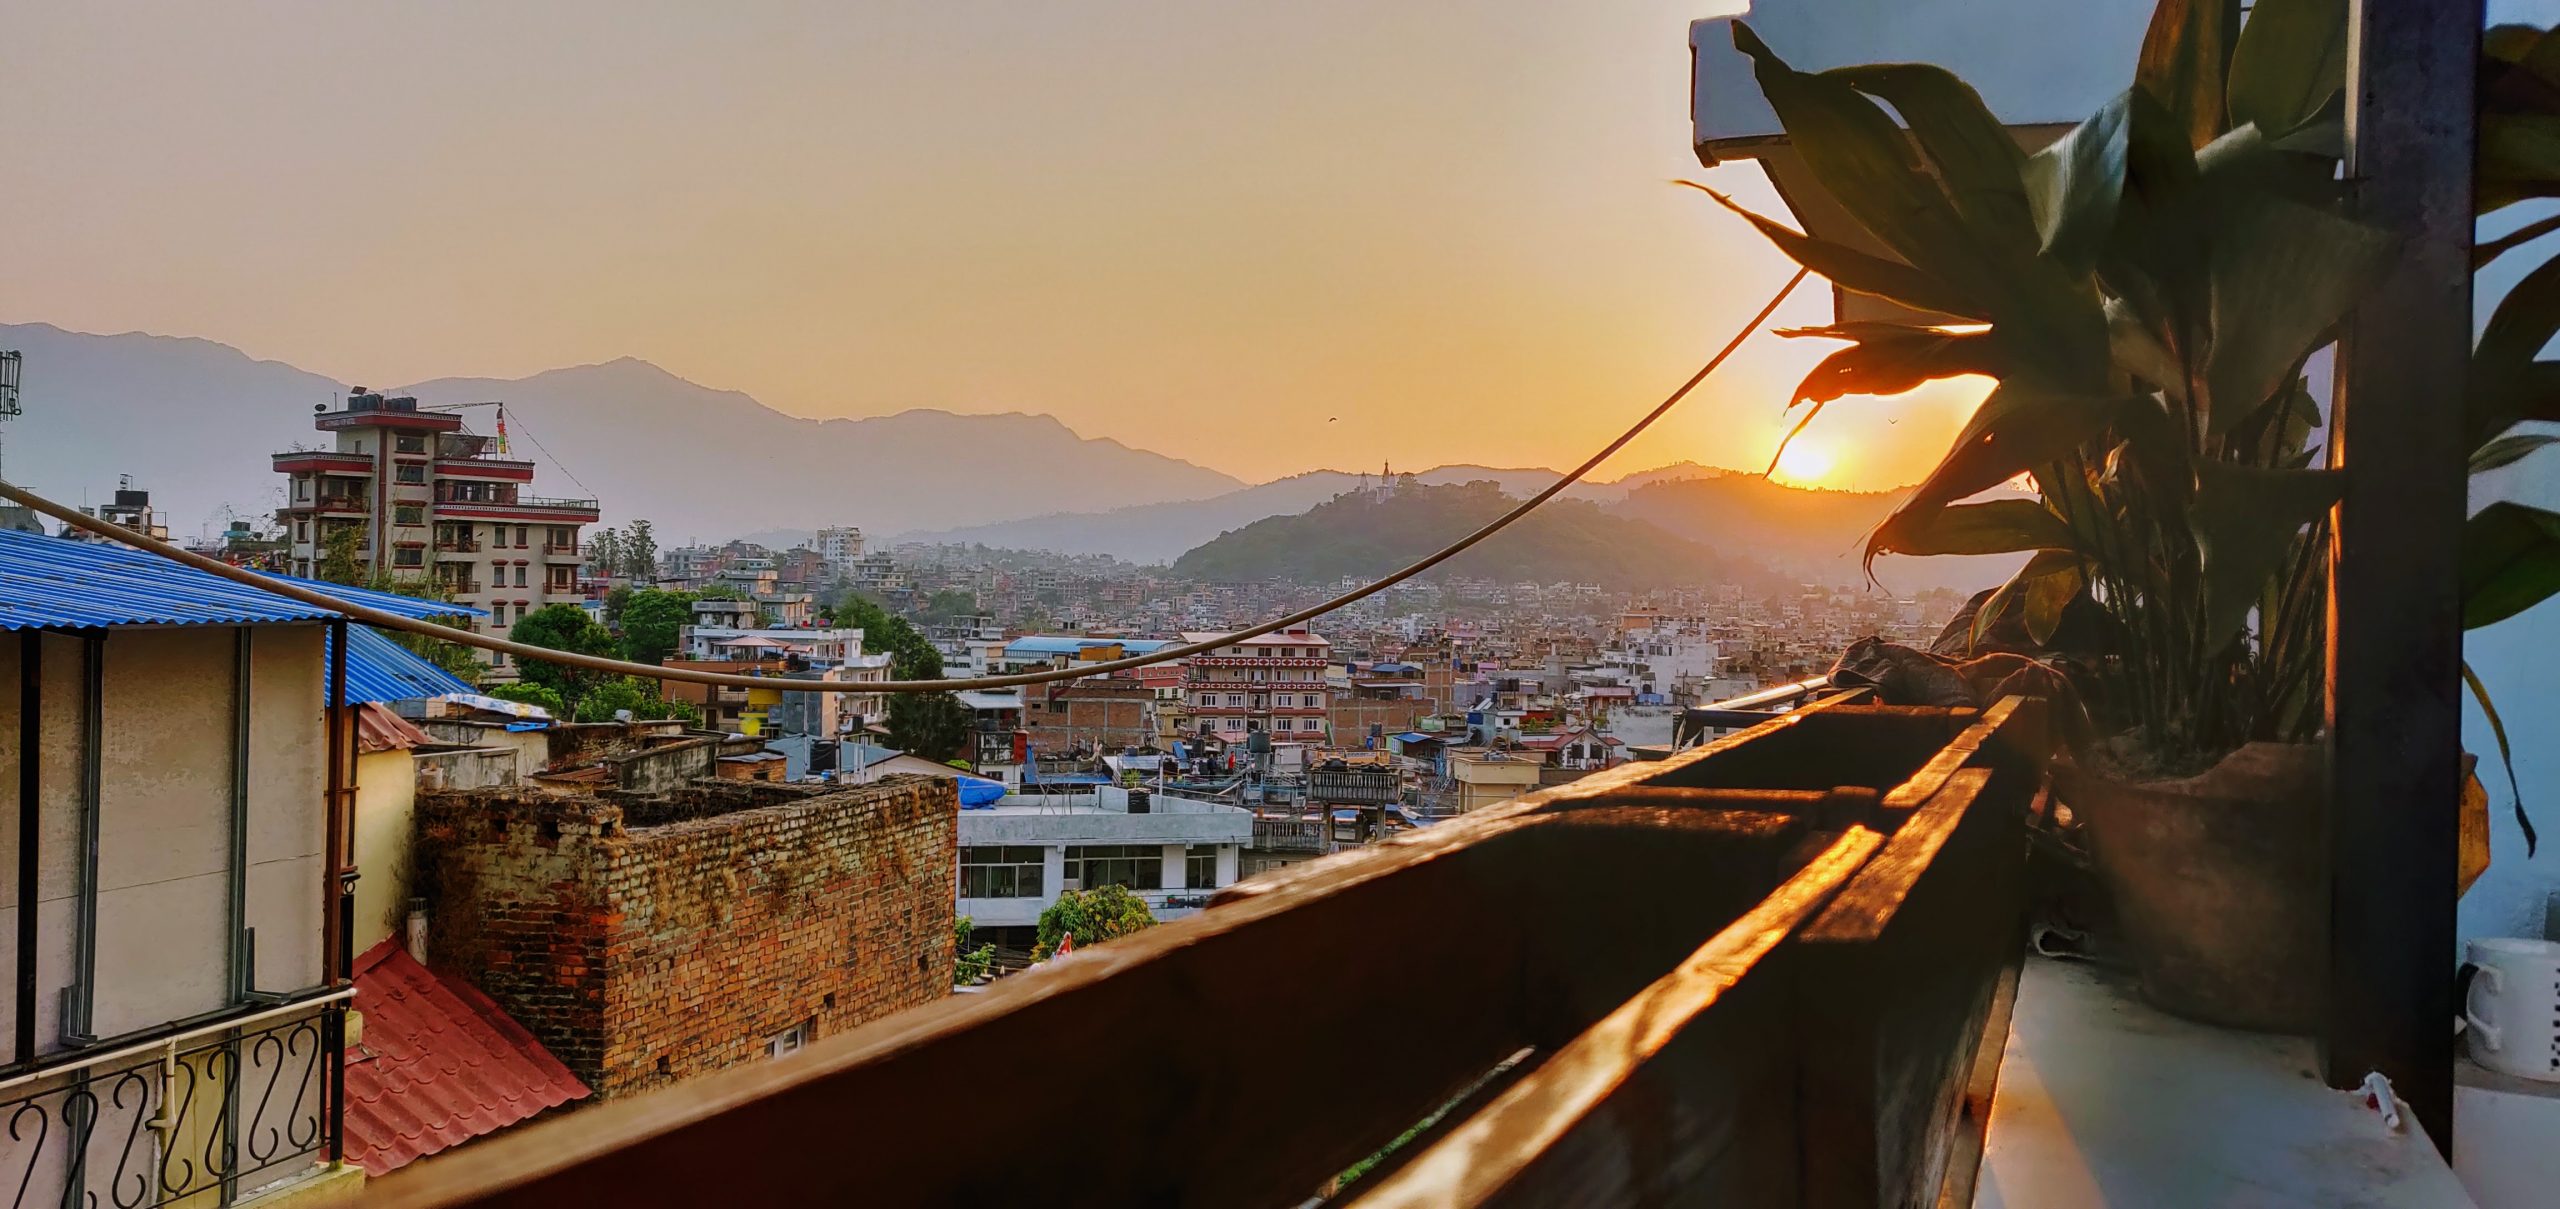 Community - Yog Hostel, Kathmandu. Photo: Jennifer Richardson